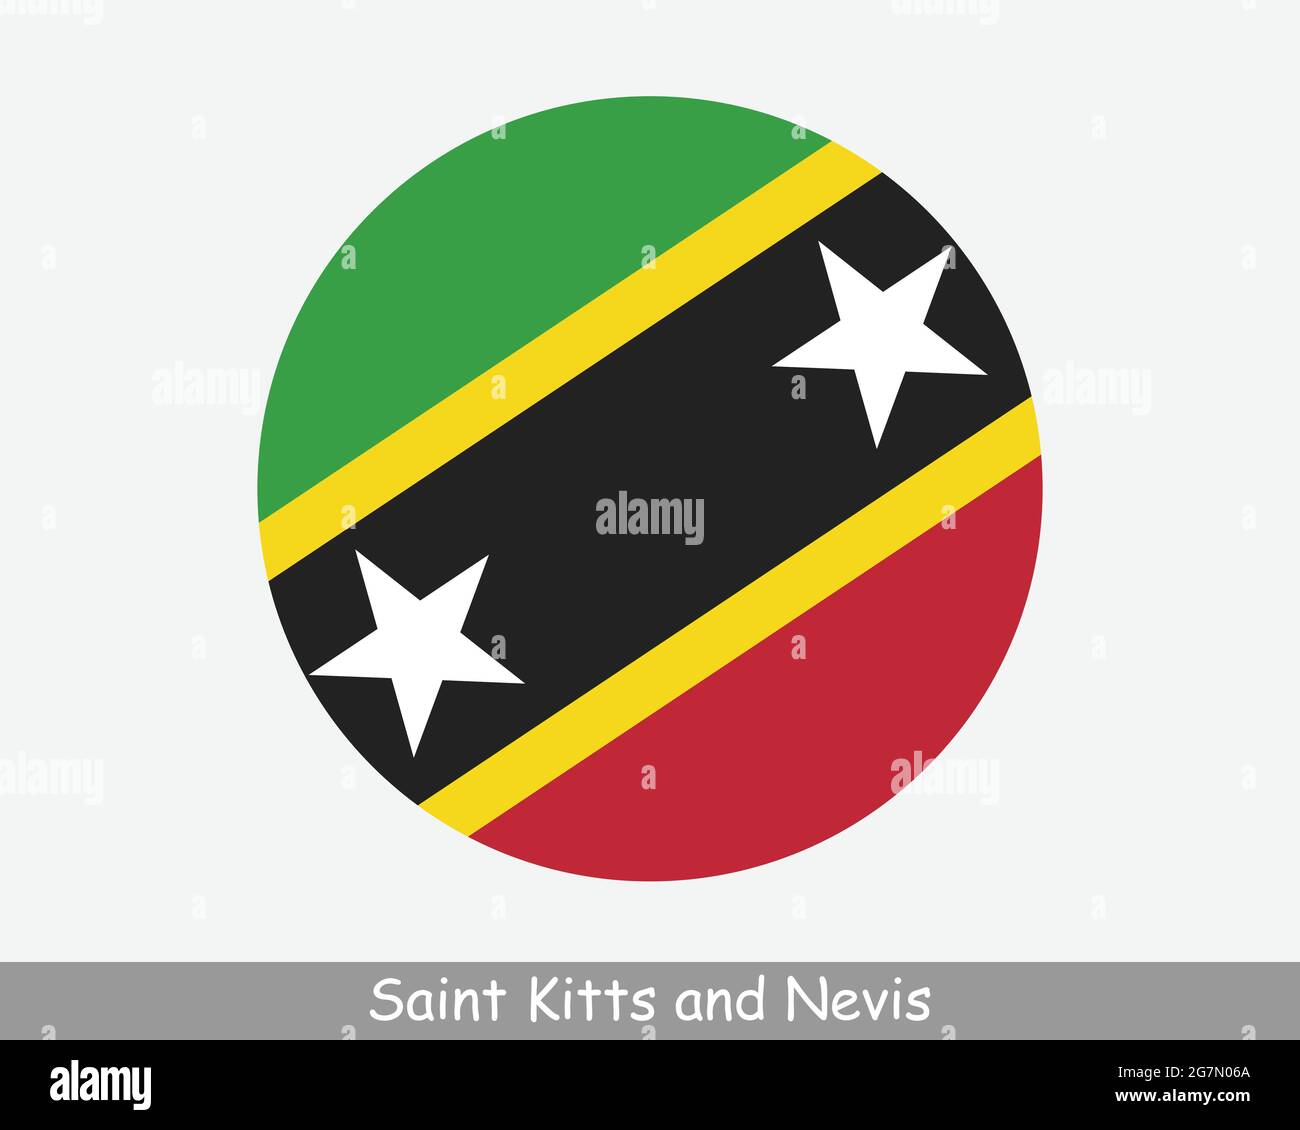 Saint Kitts and Nevis Round Circle Flag. Kittitian and Nevisian Circular Button Banner Icon. EPS Vector Stock Vector